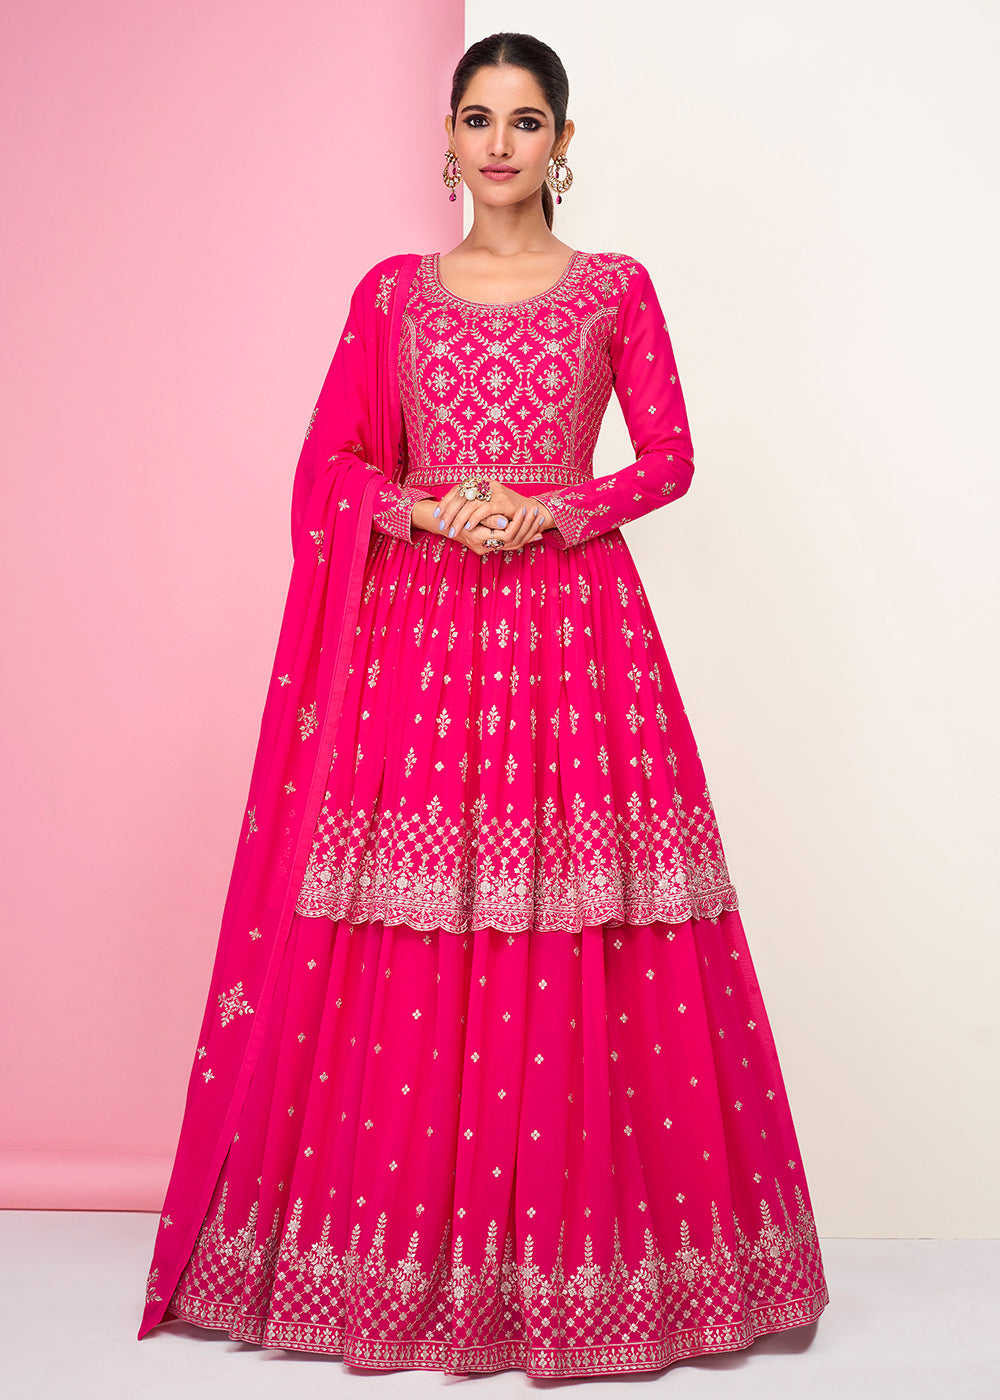 Buy Now Incredible Pink Sharara Top Style Lehenga Anarkali Online in USA, UK, Australia, New Zealand, Canada & Worldwide at Empress Clothing.